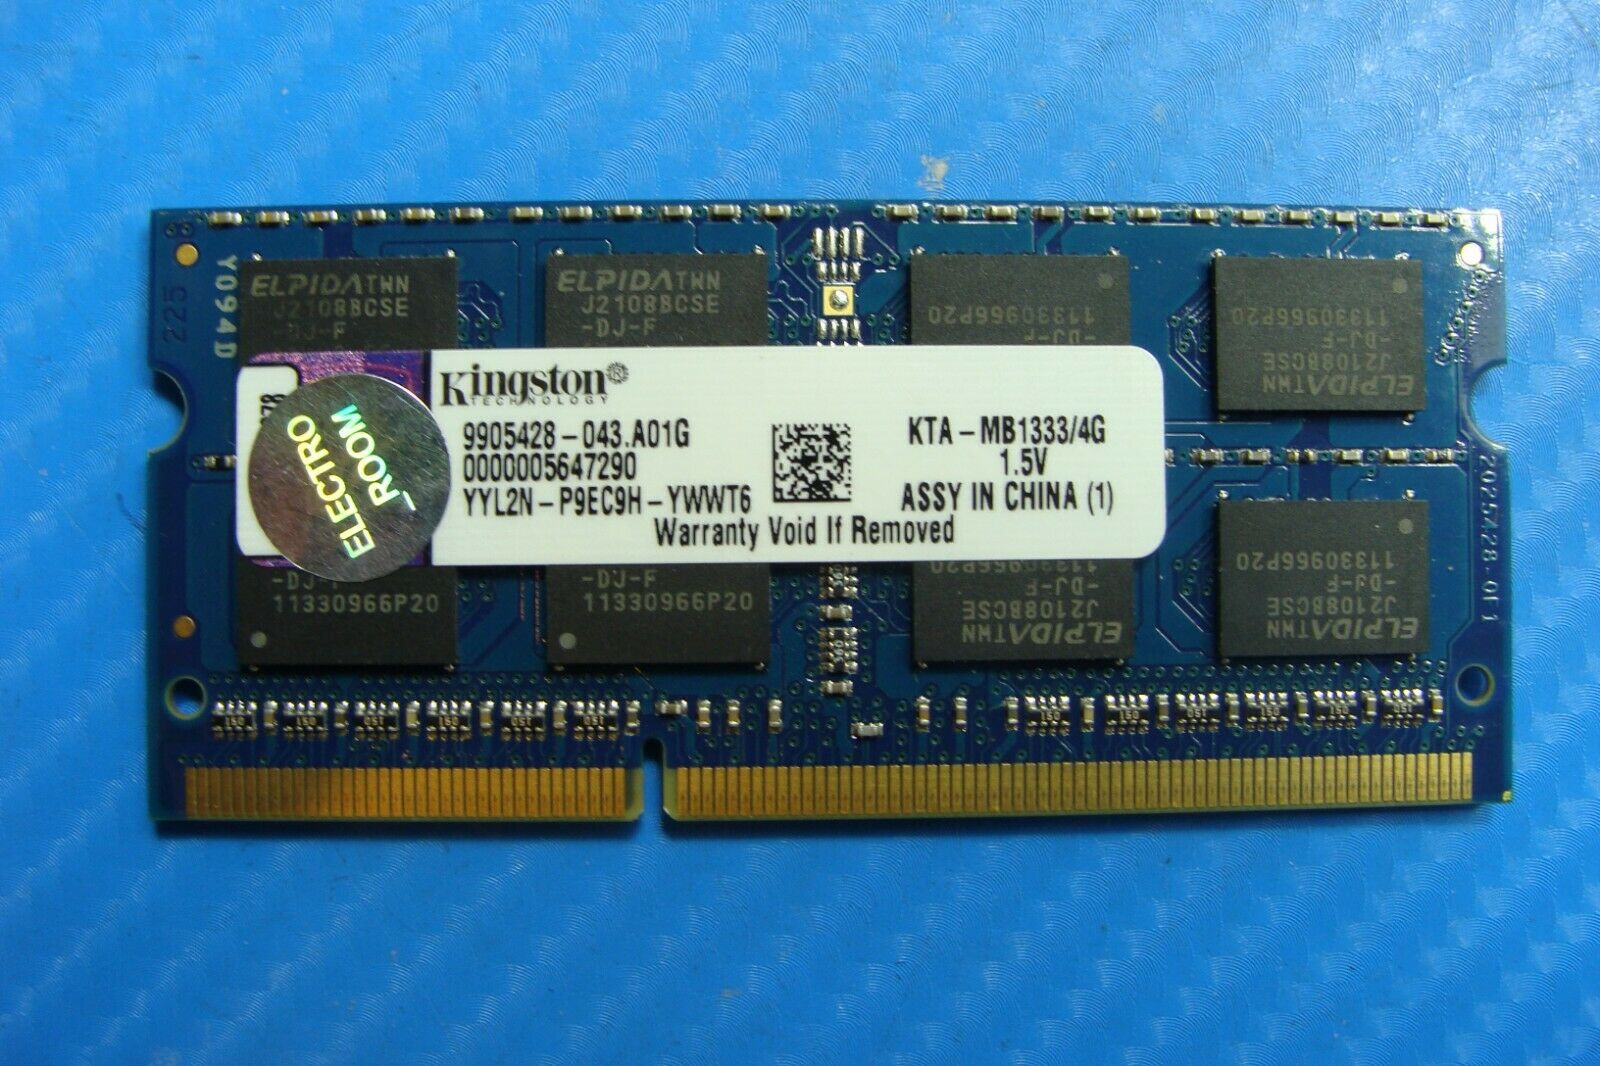 MacBook Pro A1286 Kingston 4Gb Memory RAM SO-DIMM kta-mb1333/4g - Laptop Parts - Buy Authentic Computer Parts - Top Seller Ebay